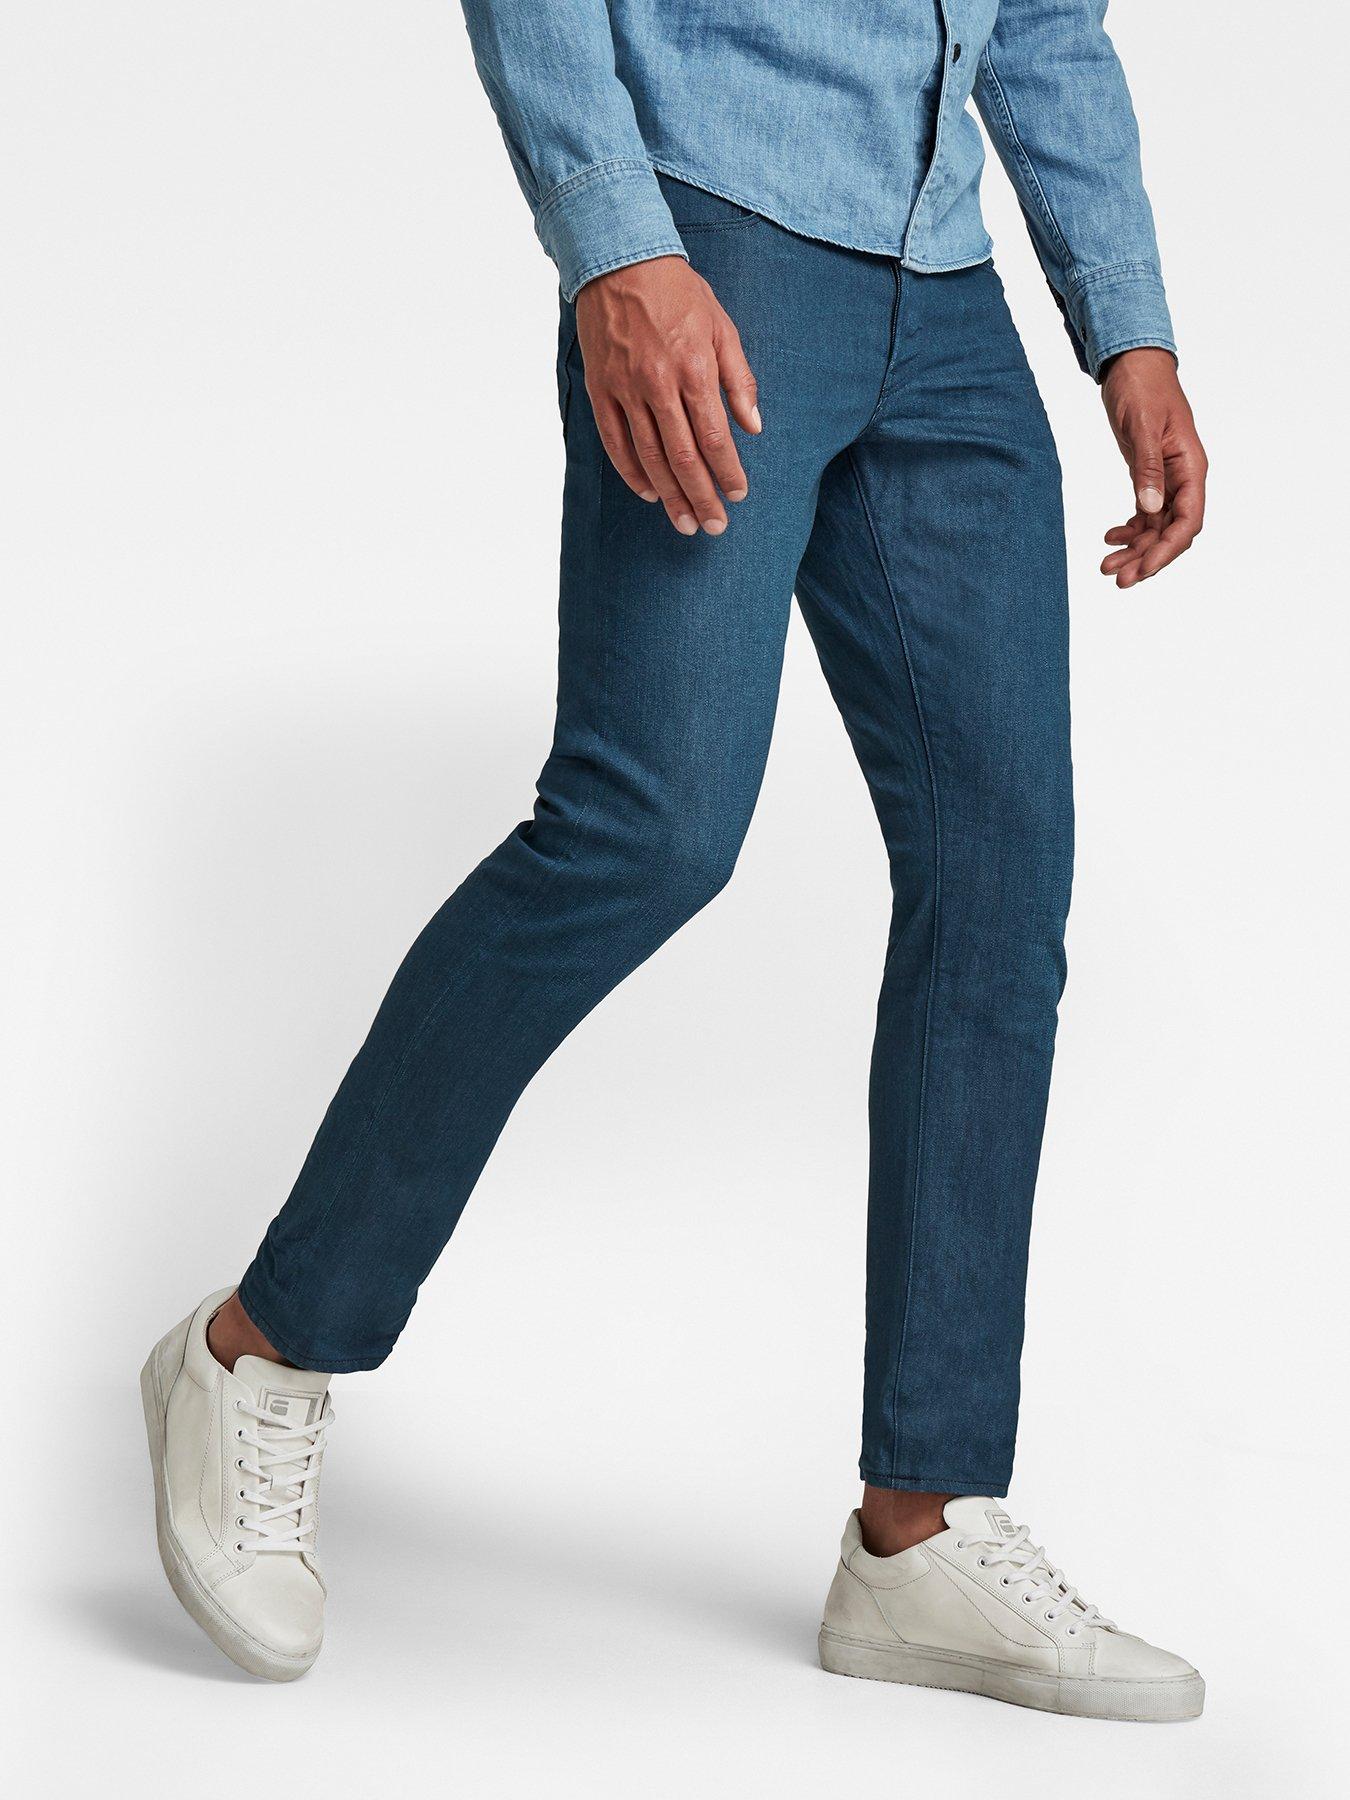 Grey Black Blue Casual Midweight Jeans Pants Sonms Mens Fashion Boutique Pure Color Slim Leisure Jeans 